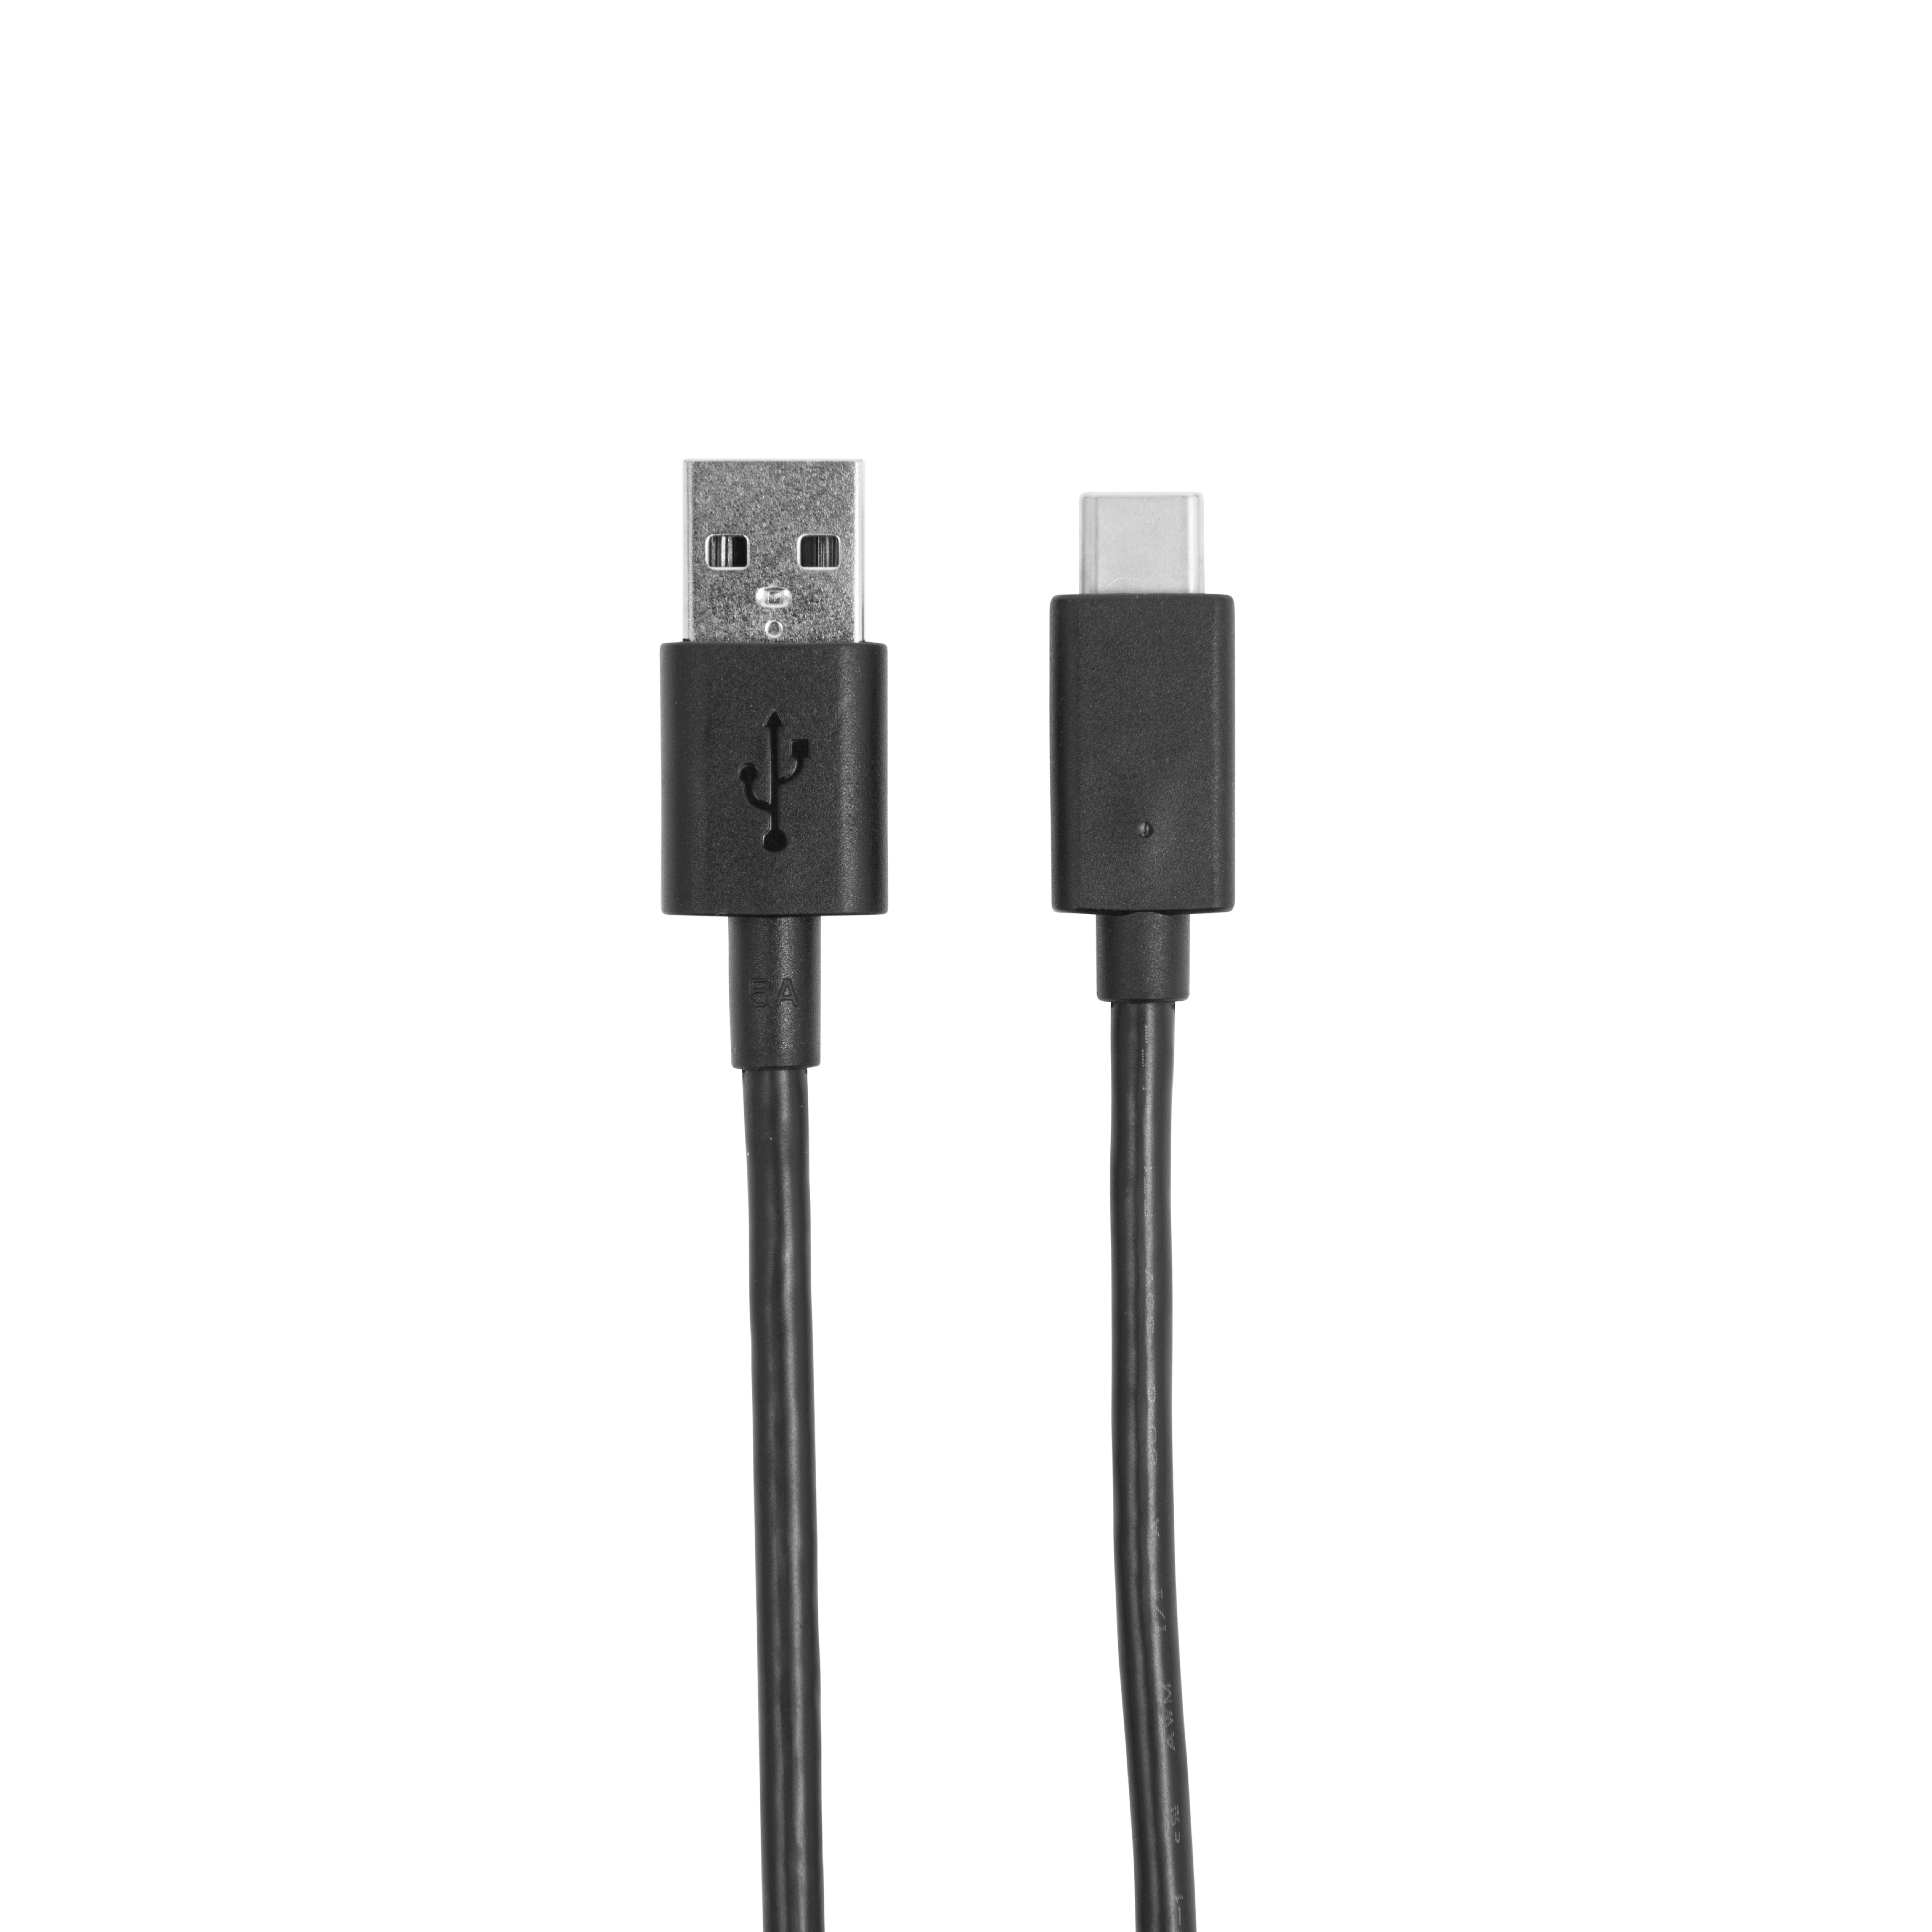 Trust Calyx câble USB OTG, USB A - USB C, 0,15 m, noir